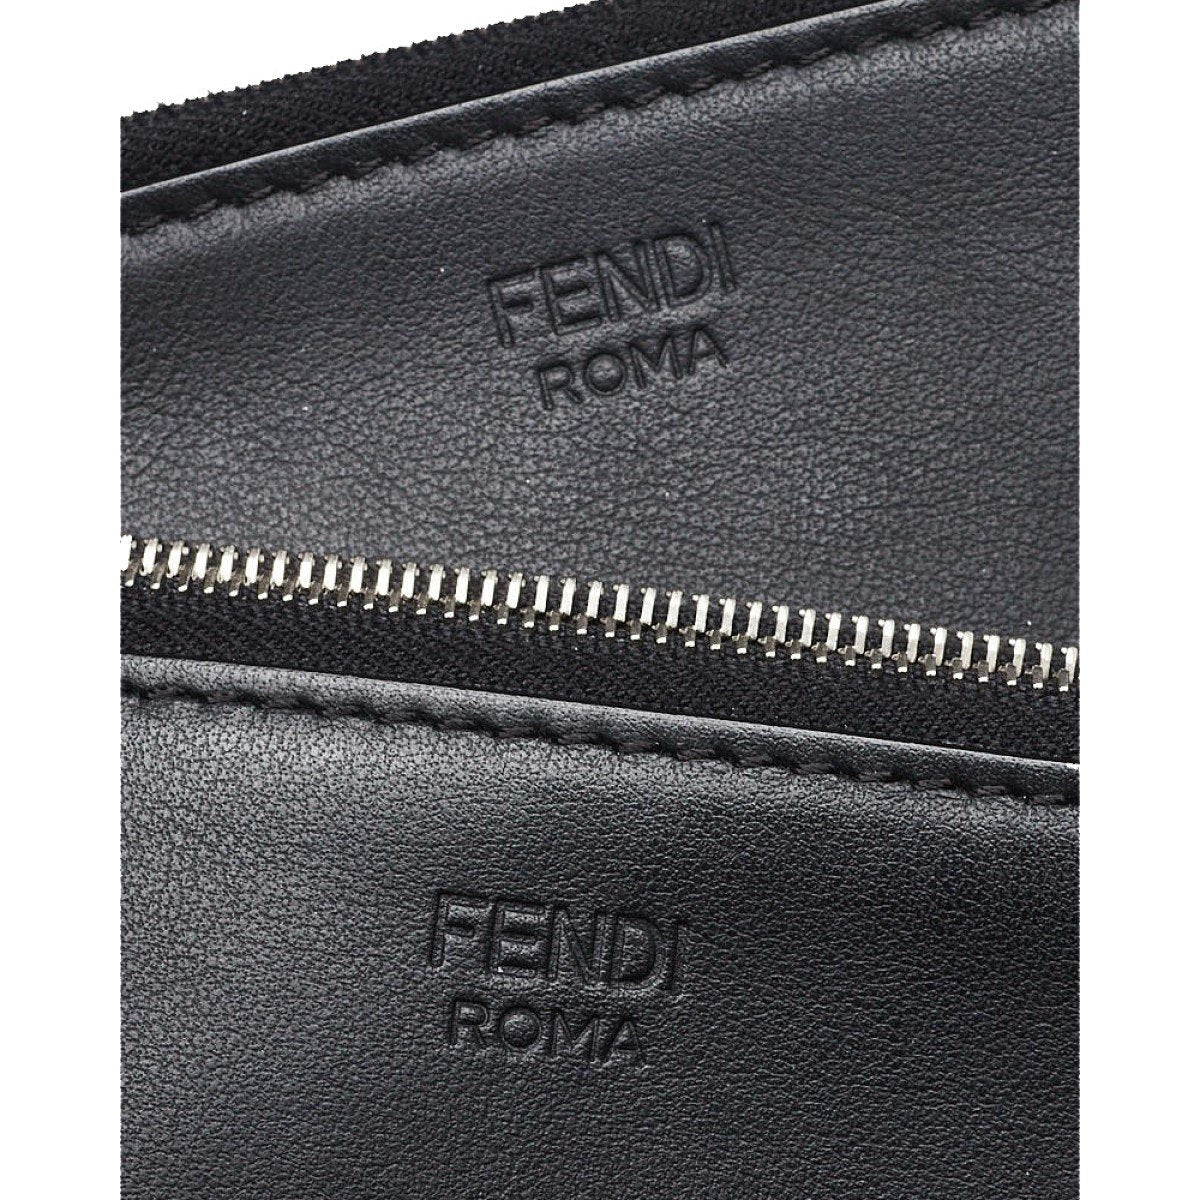 Fendi Black Leather Pearl Studded Triplette Multi Clutch Handbag - LUXURYMRKT